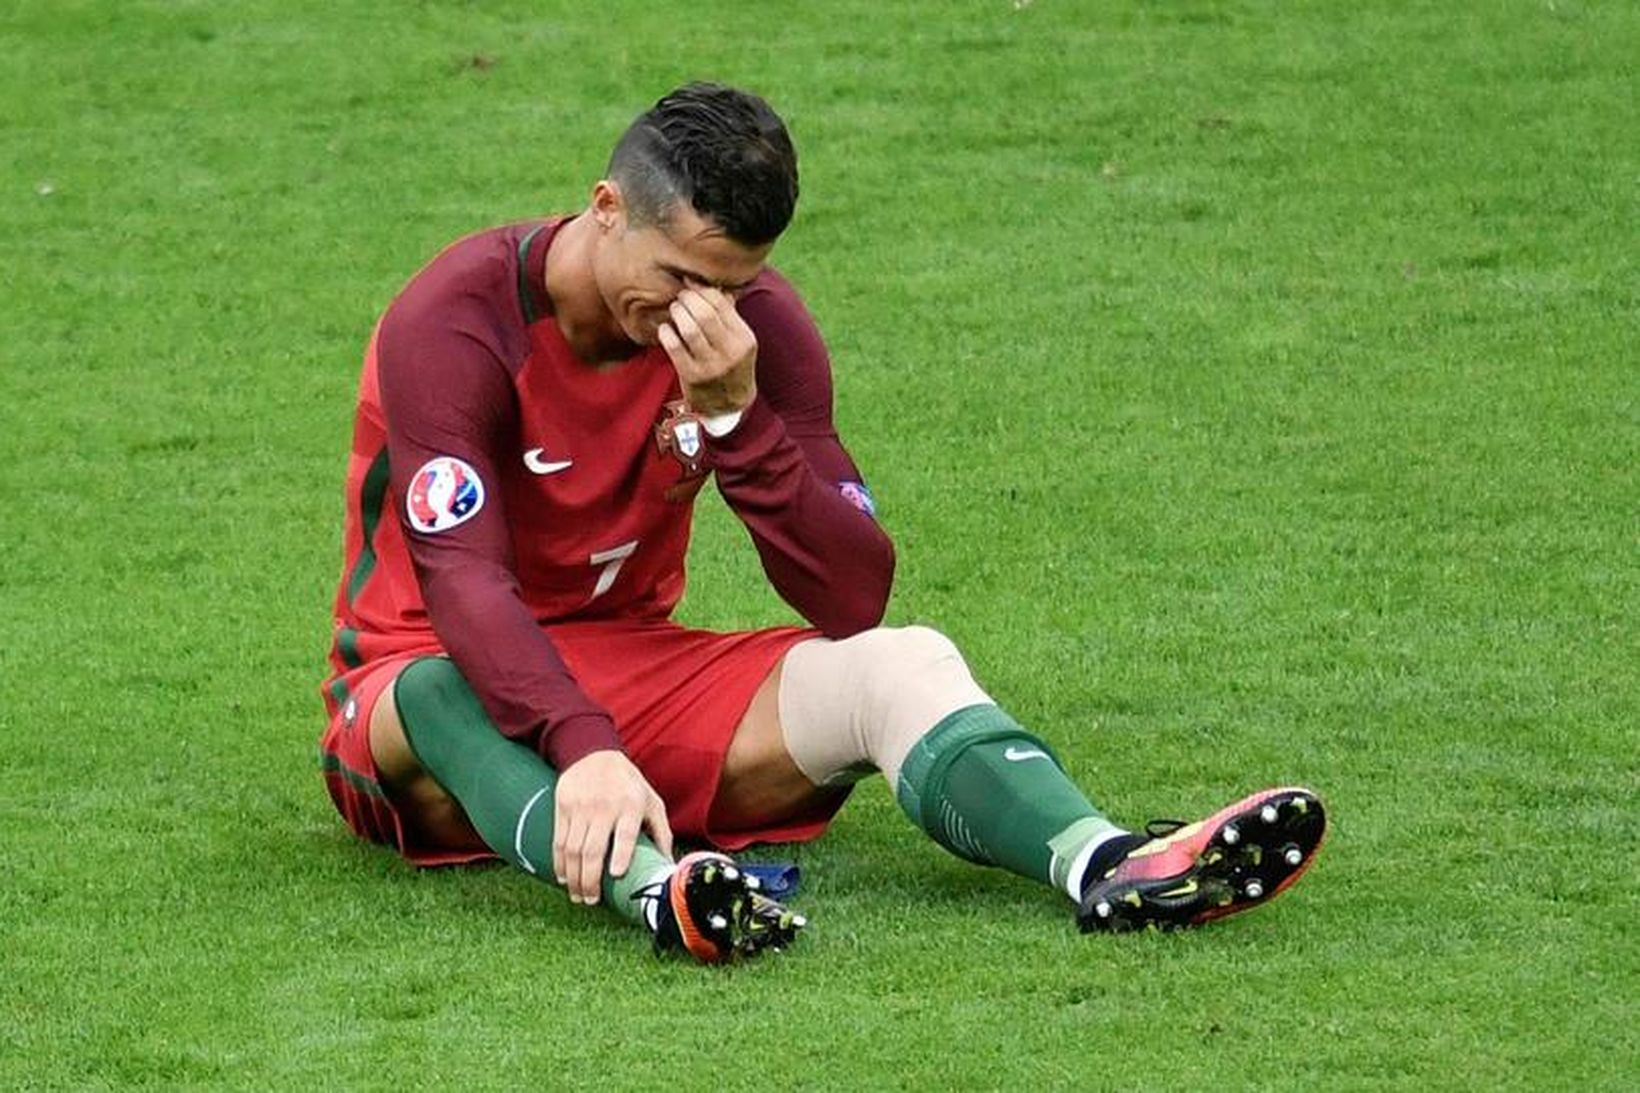 Mölfluga settist á augabrún Cristiano Ronaldo þar sem hann sat …